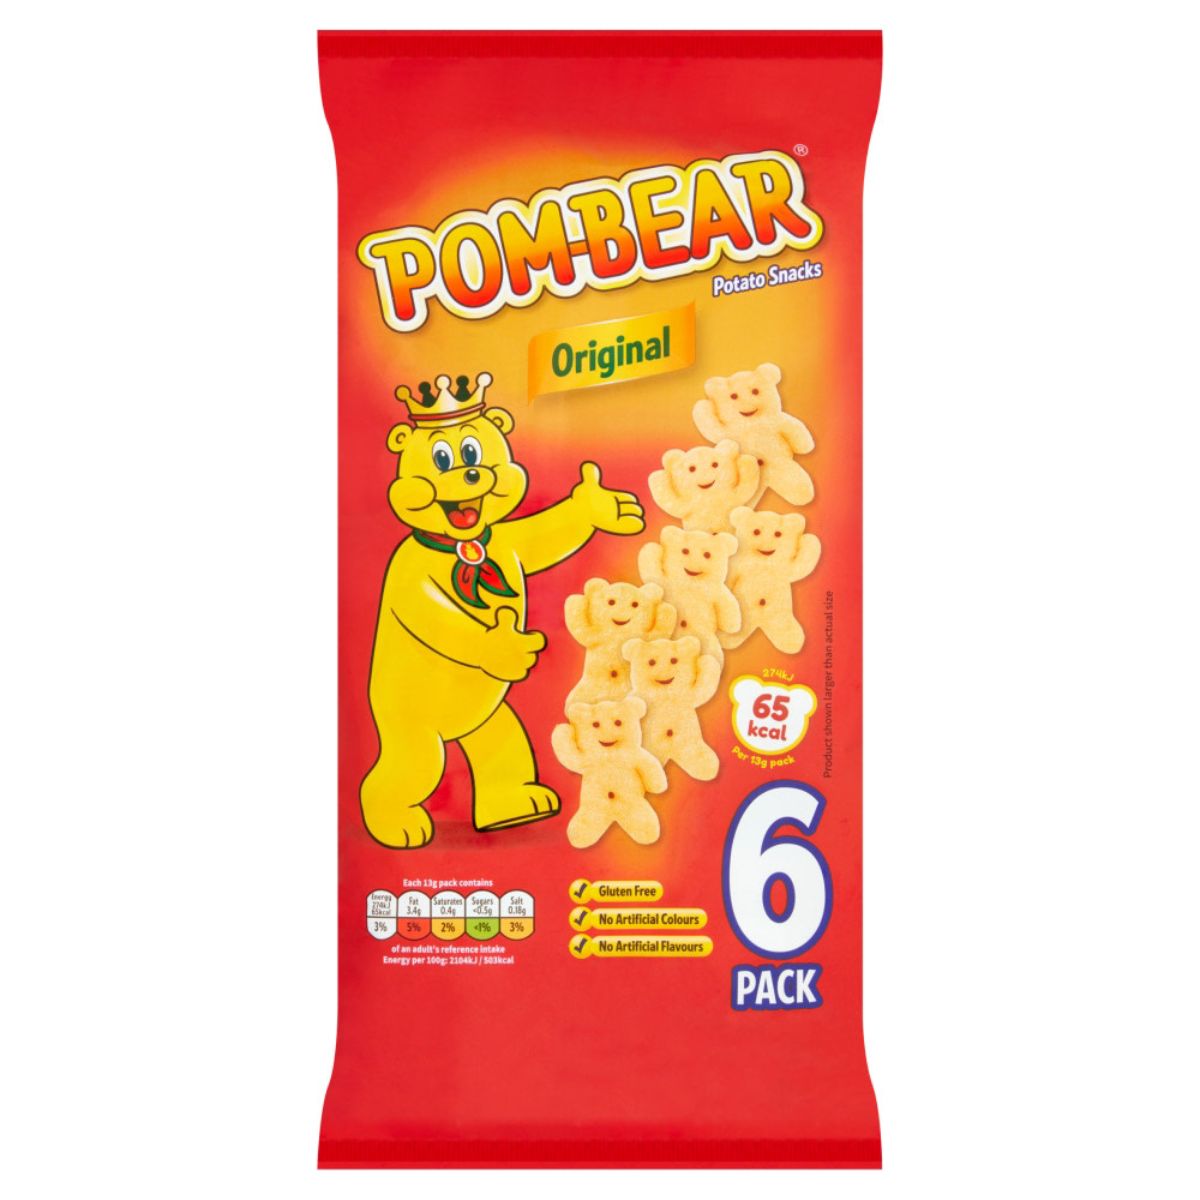 A bag of PomBear - Original potato Snacks - 6 Packs with a bear on it.